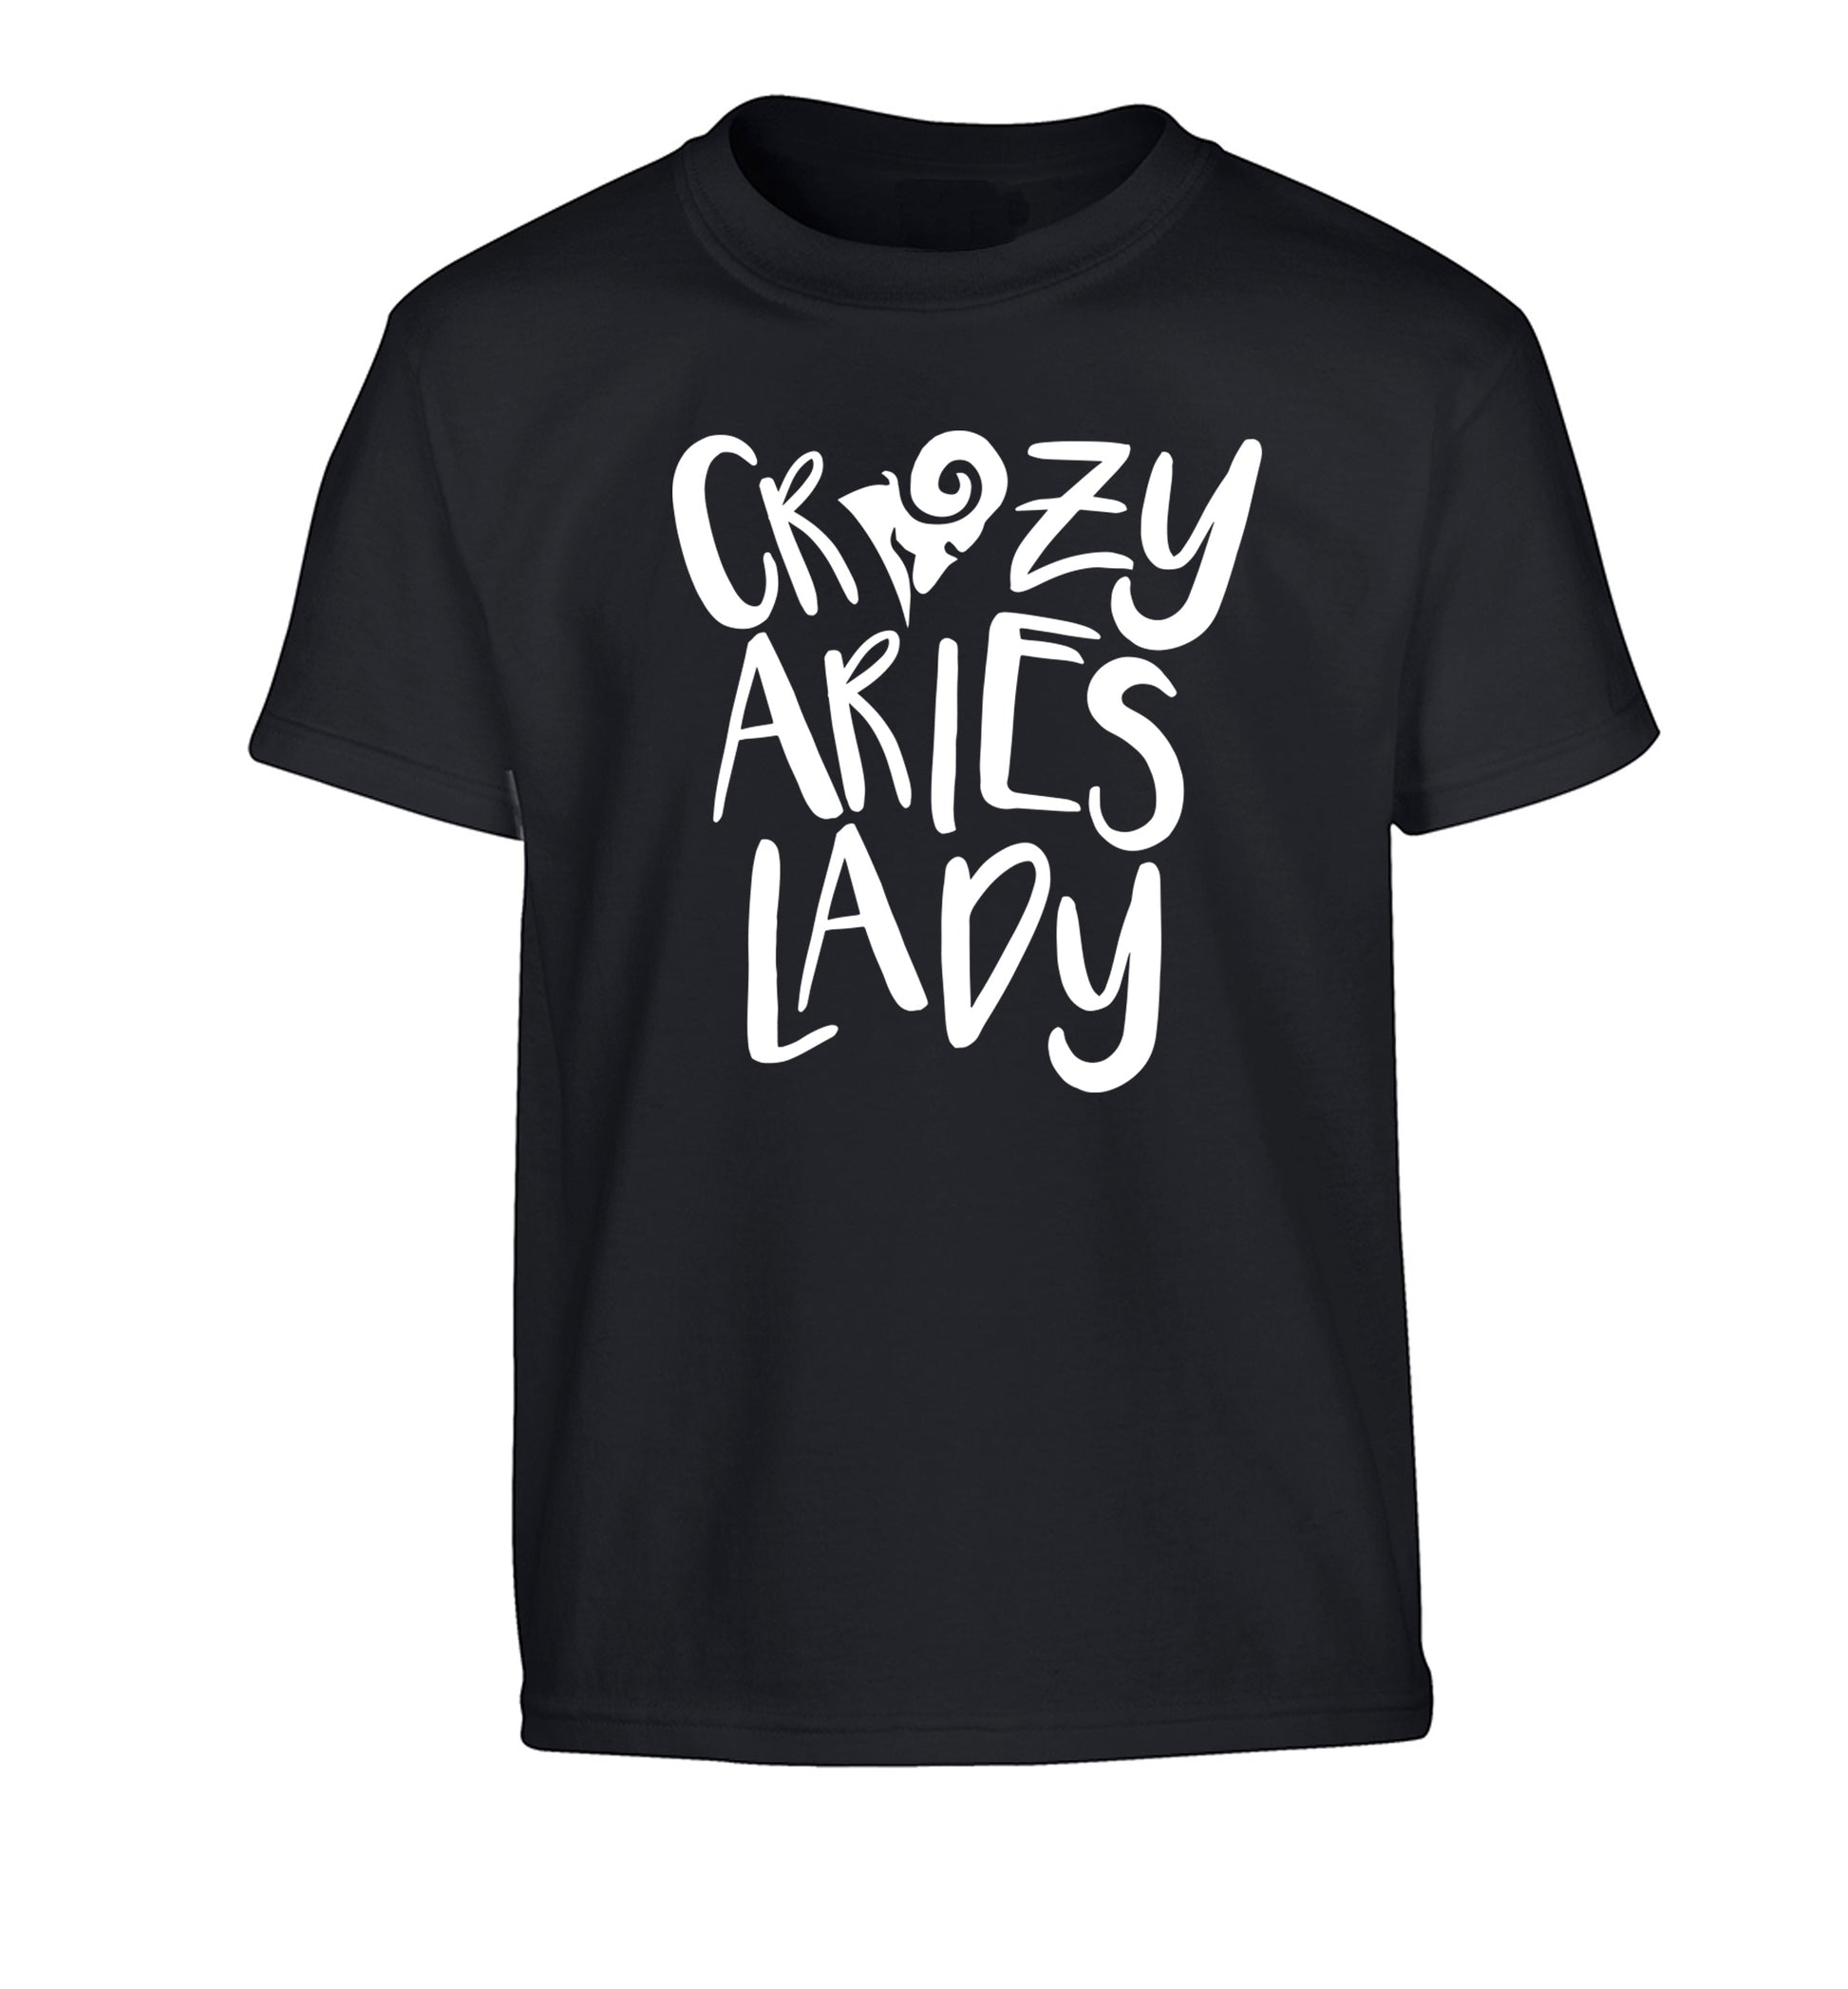 Crazy aries lady Children's black Tshirt 12-13 Years